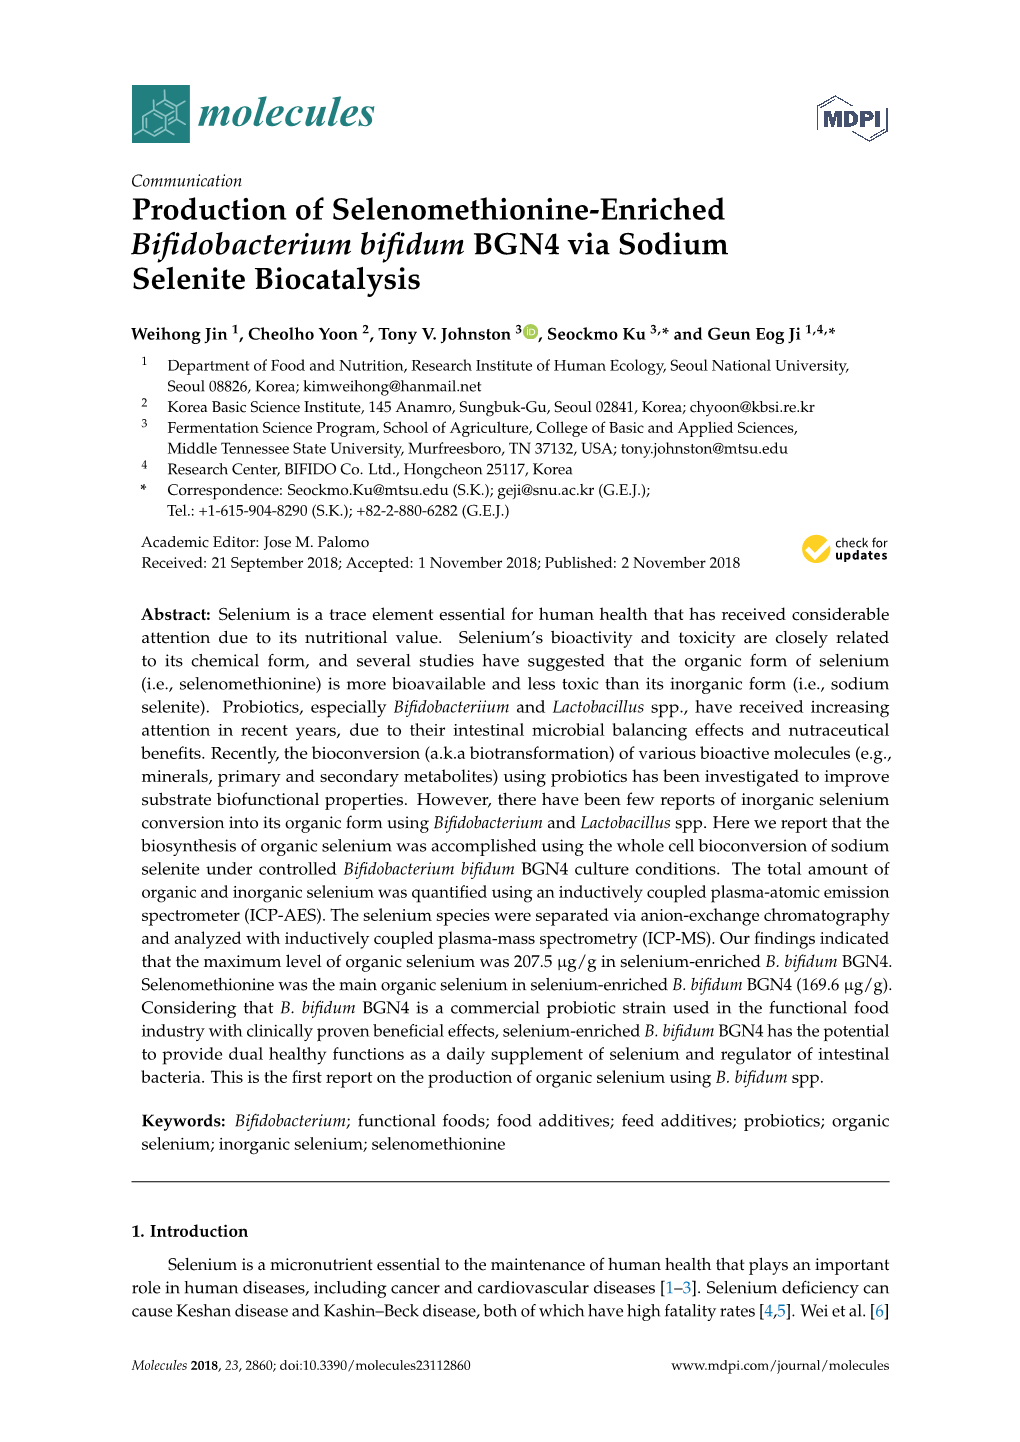 Production of Selenomethionine-Enriched Biﬁdobacterium Biﬁdum BGN4 Via Sodium Selenite Biocatalysis